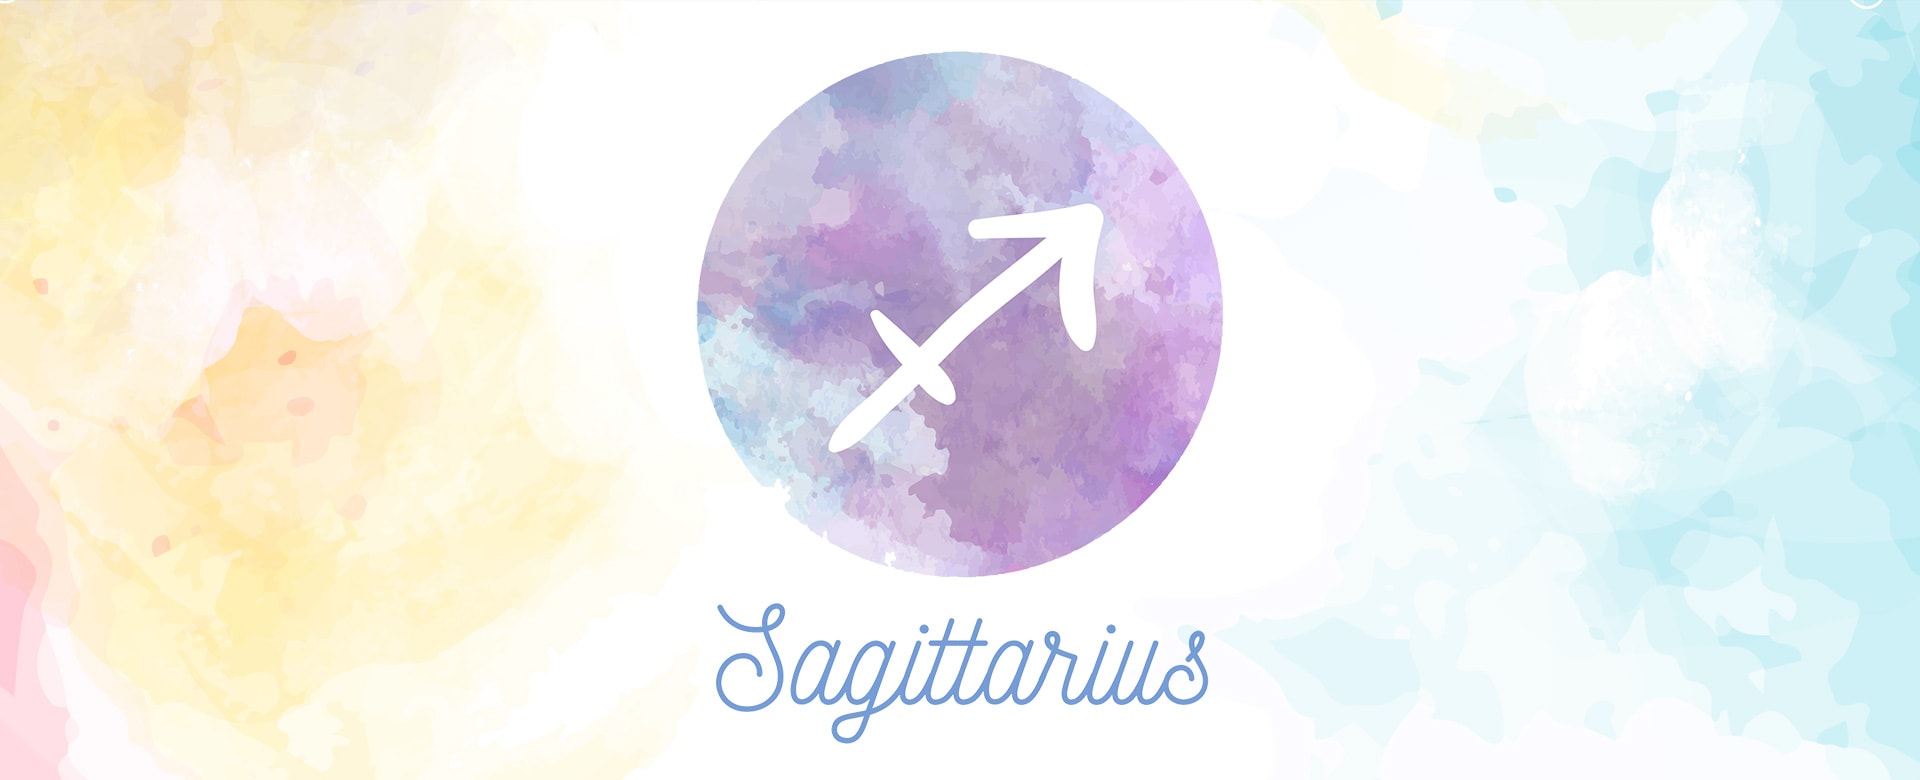 Sagittarius birthstones 1